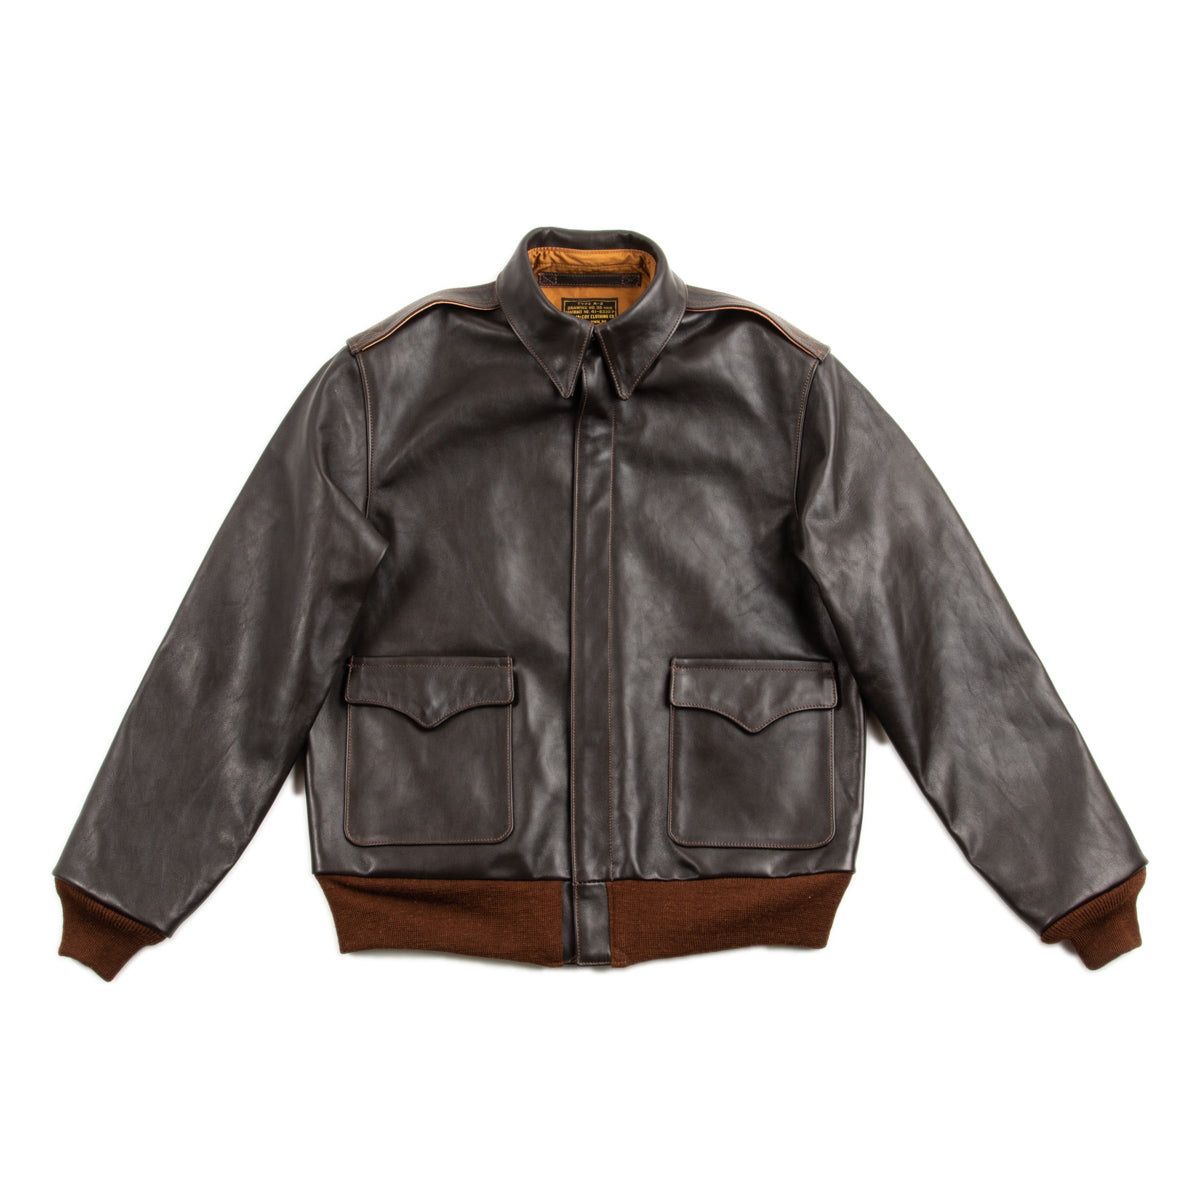 The Real McCoy's Leather Jackets – Standard & Strange